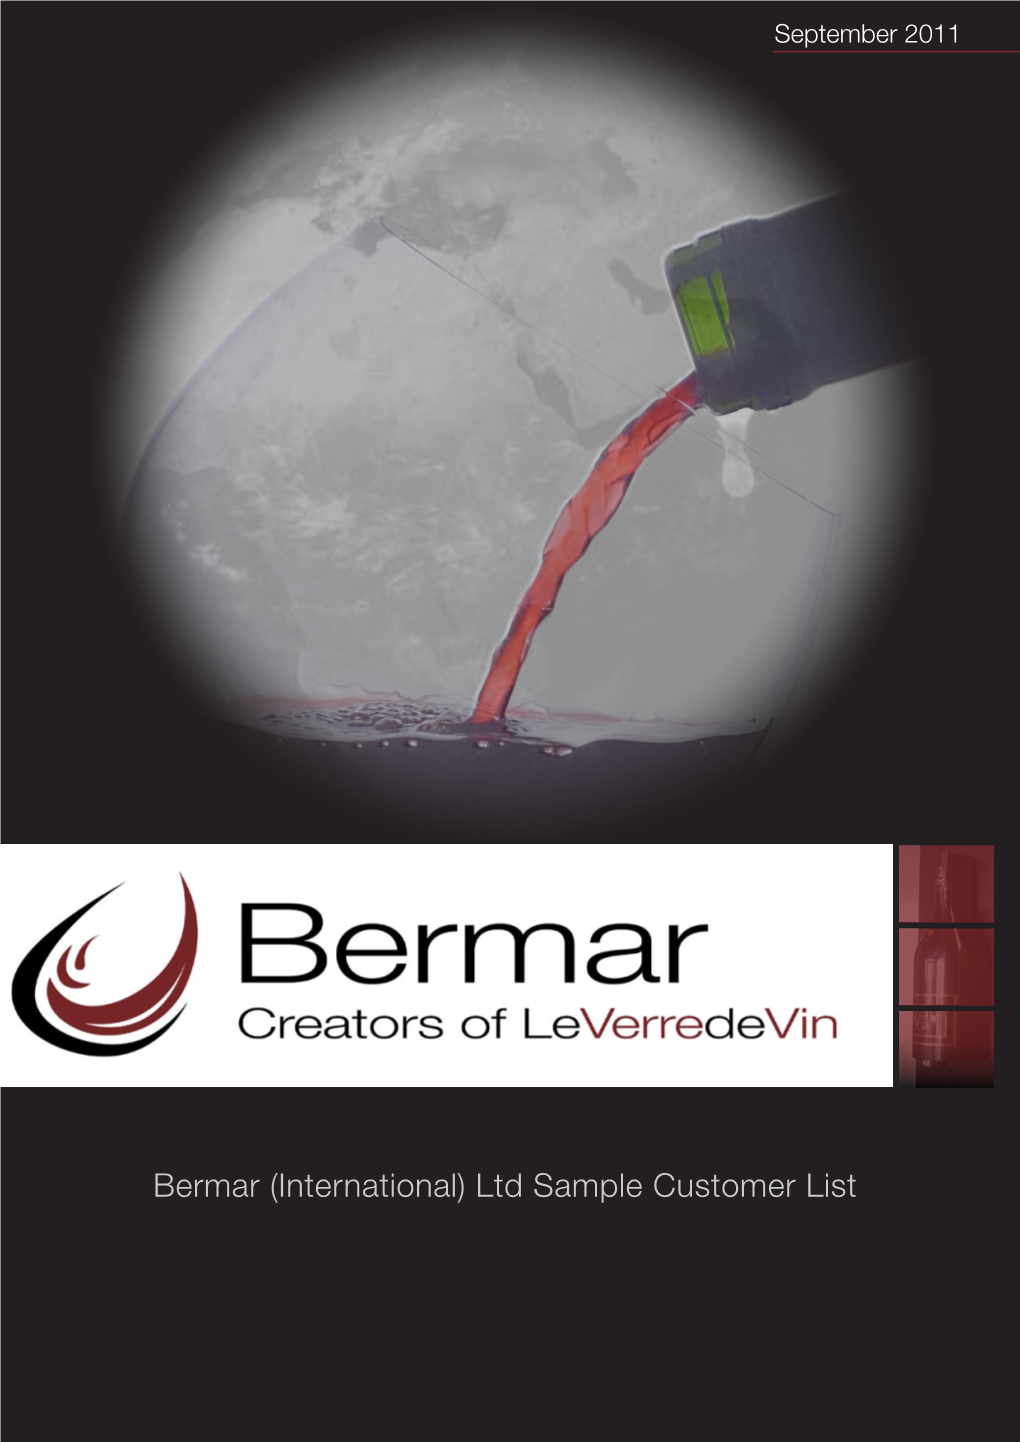 Bermar (International) Ltd Sample Customer List Introduction